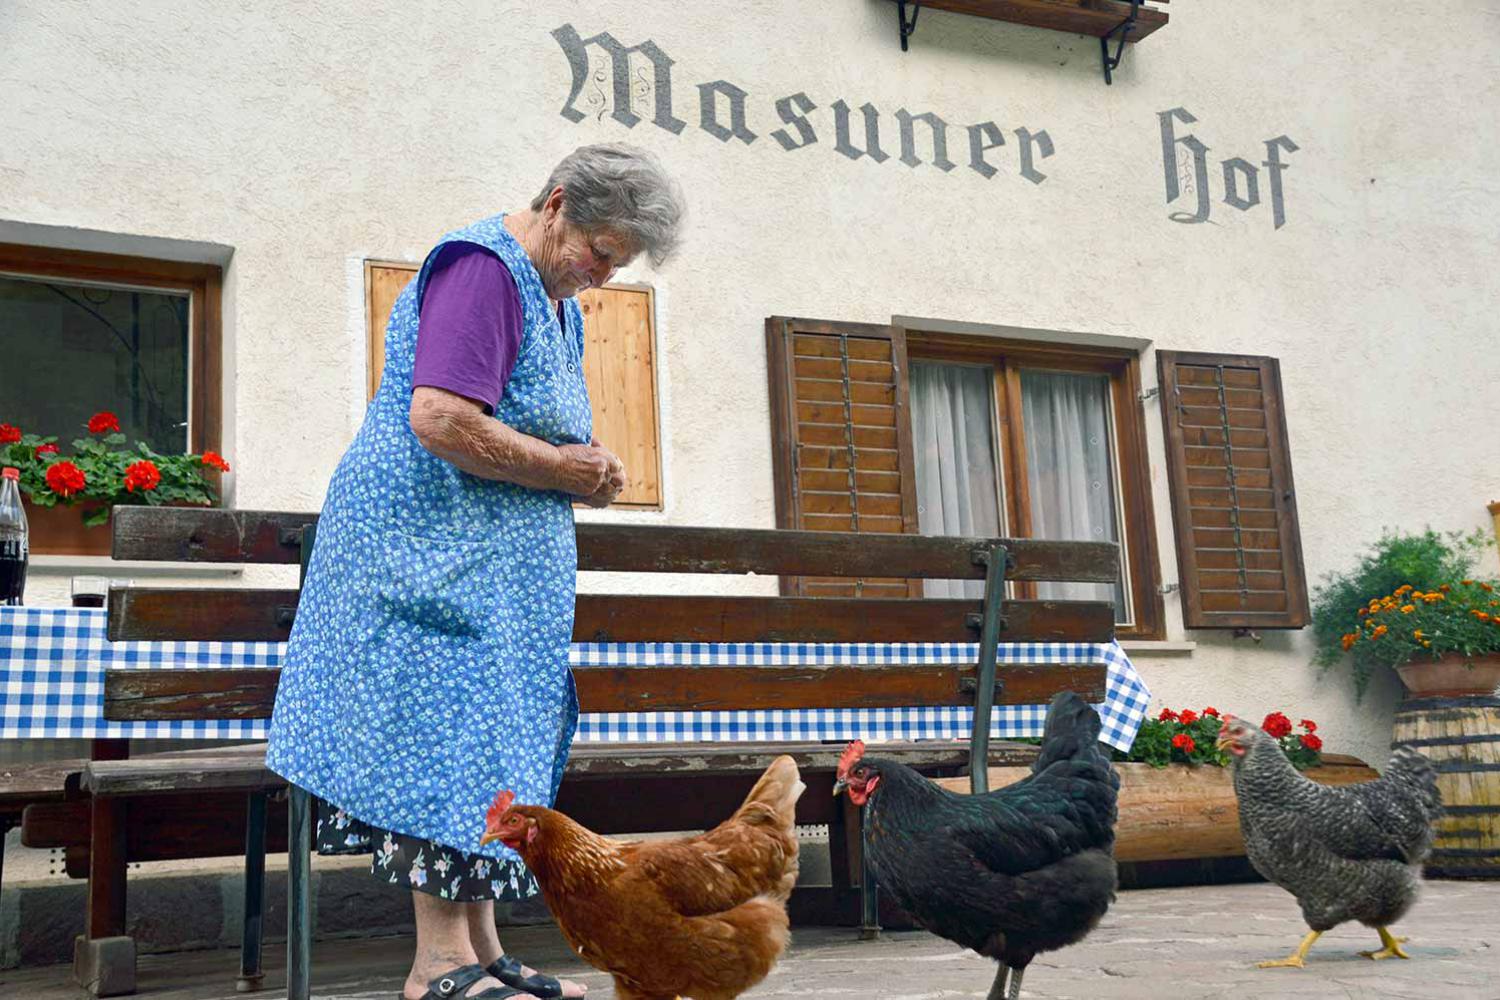 Grandma surrounded by the Masunerhof hens